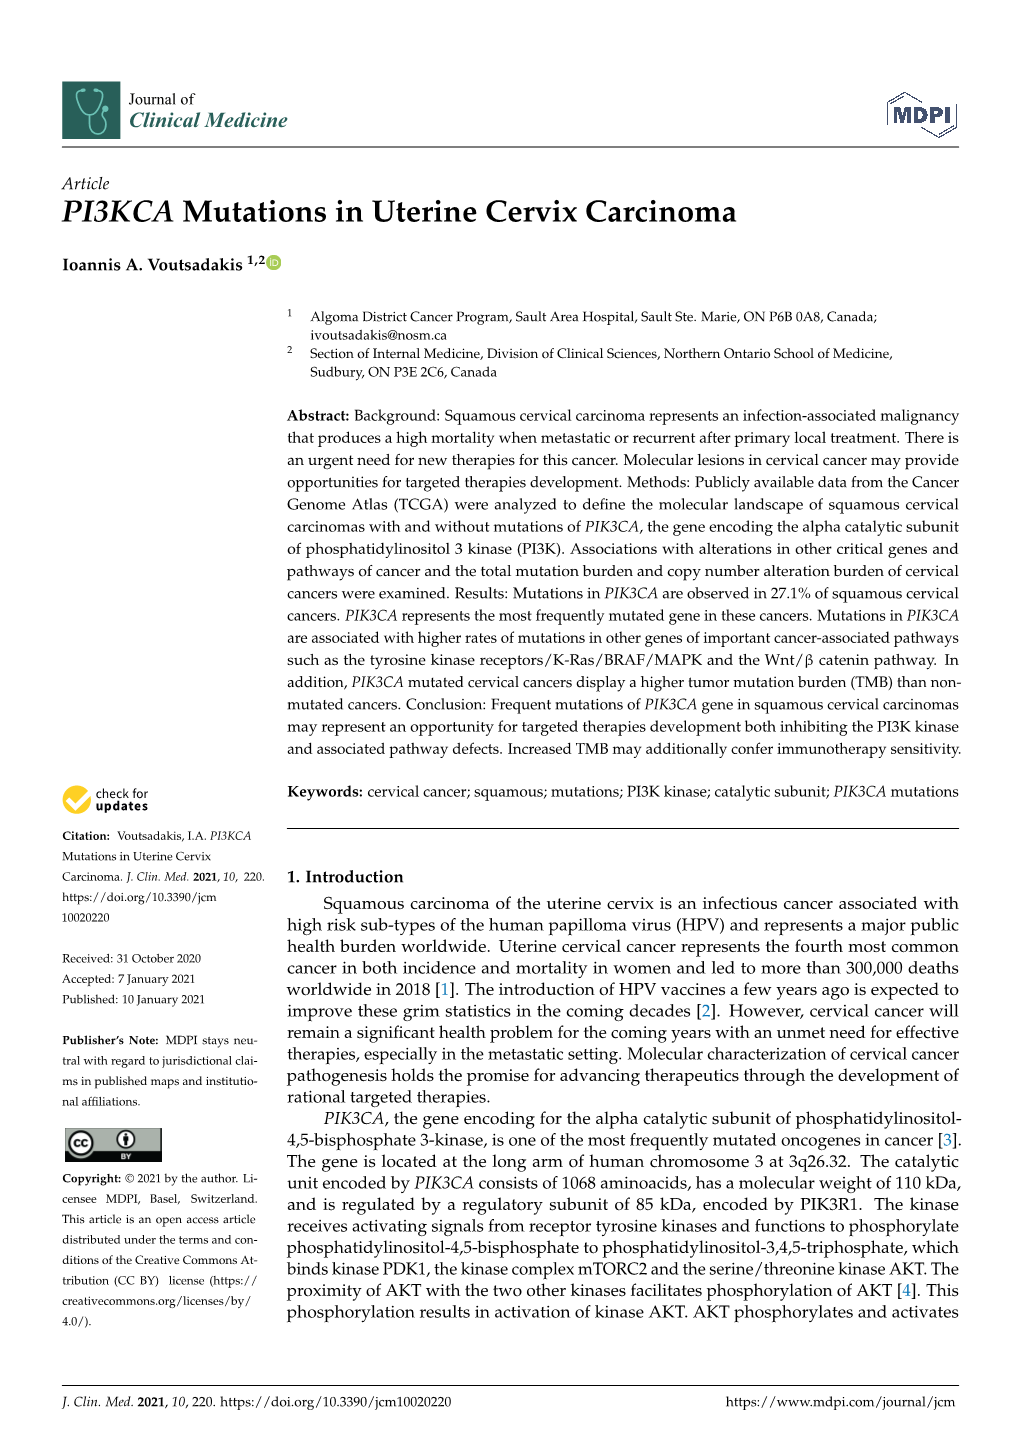 PI3KCA Mutations in Uterine Cervix Carcinoma